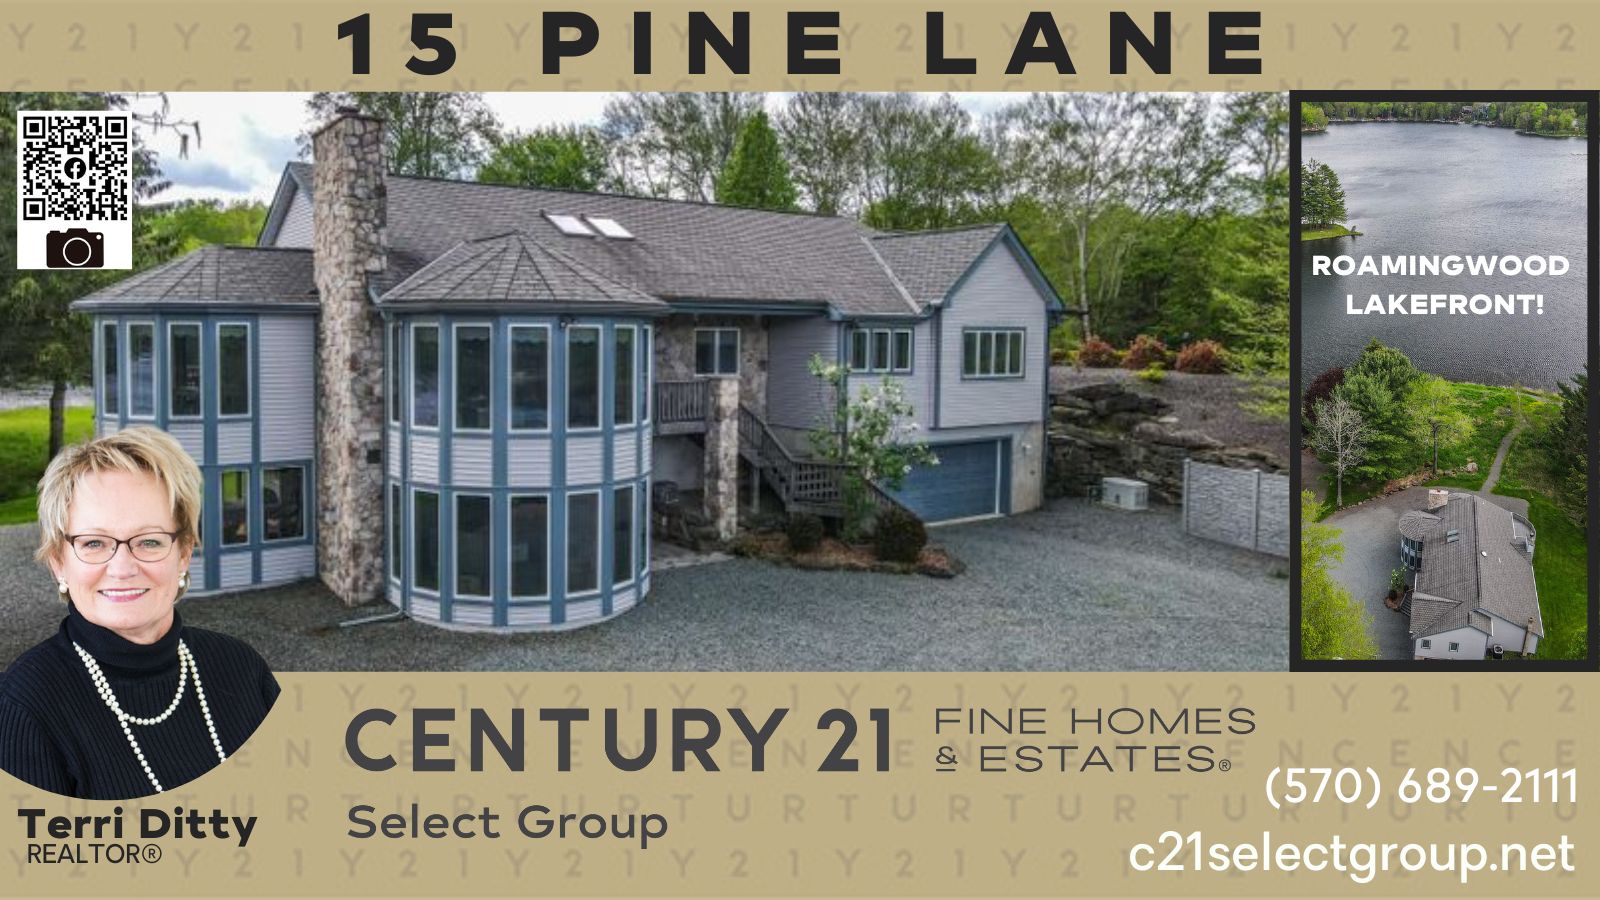 NEW REDUCED PRICE! 15 Pine Lane: ROAMINGWOOD LAKEFRONT